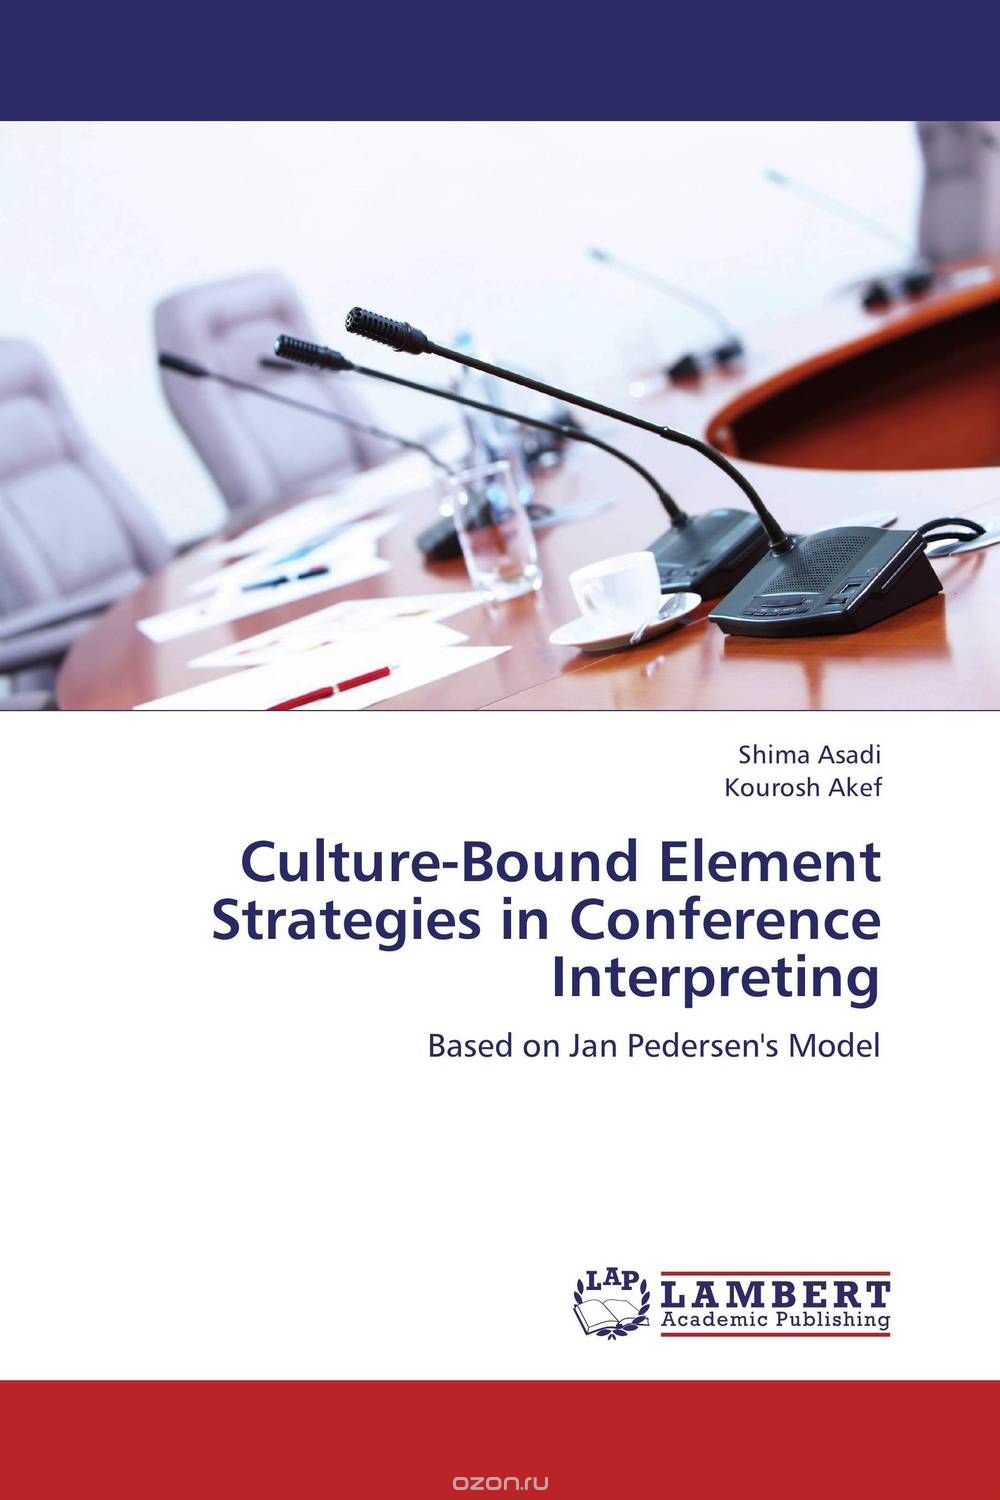 Скачать книгу "Culture-Bound Element Strategies in Conference Interpreting"